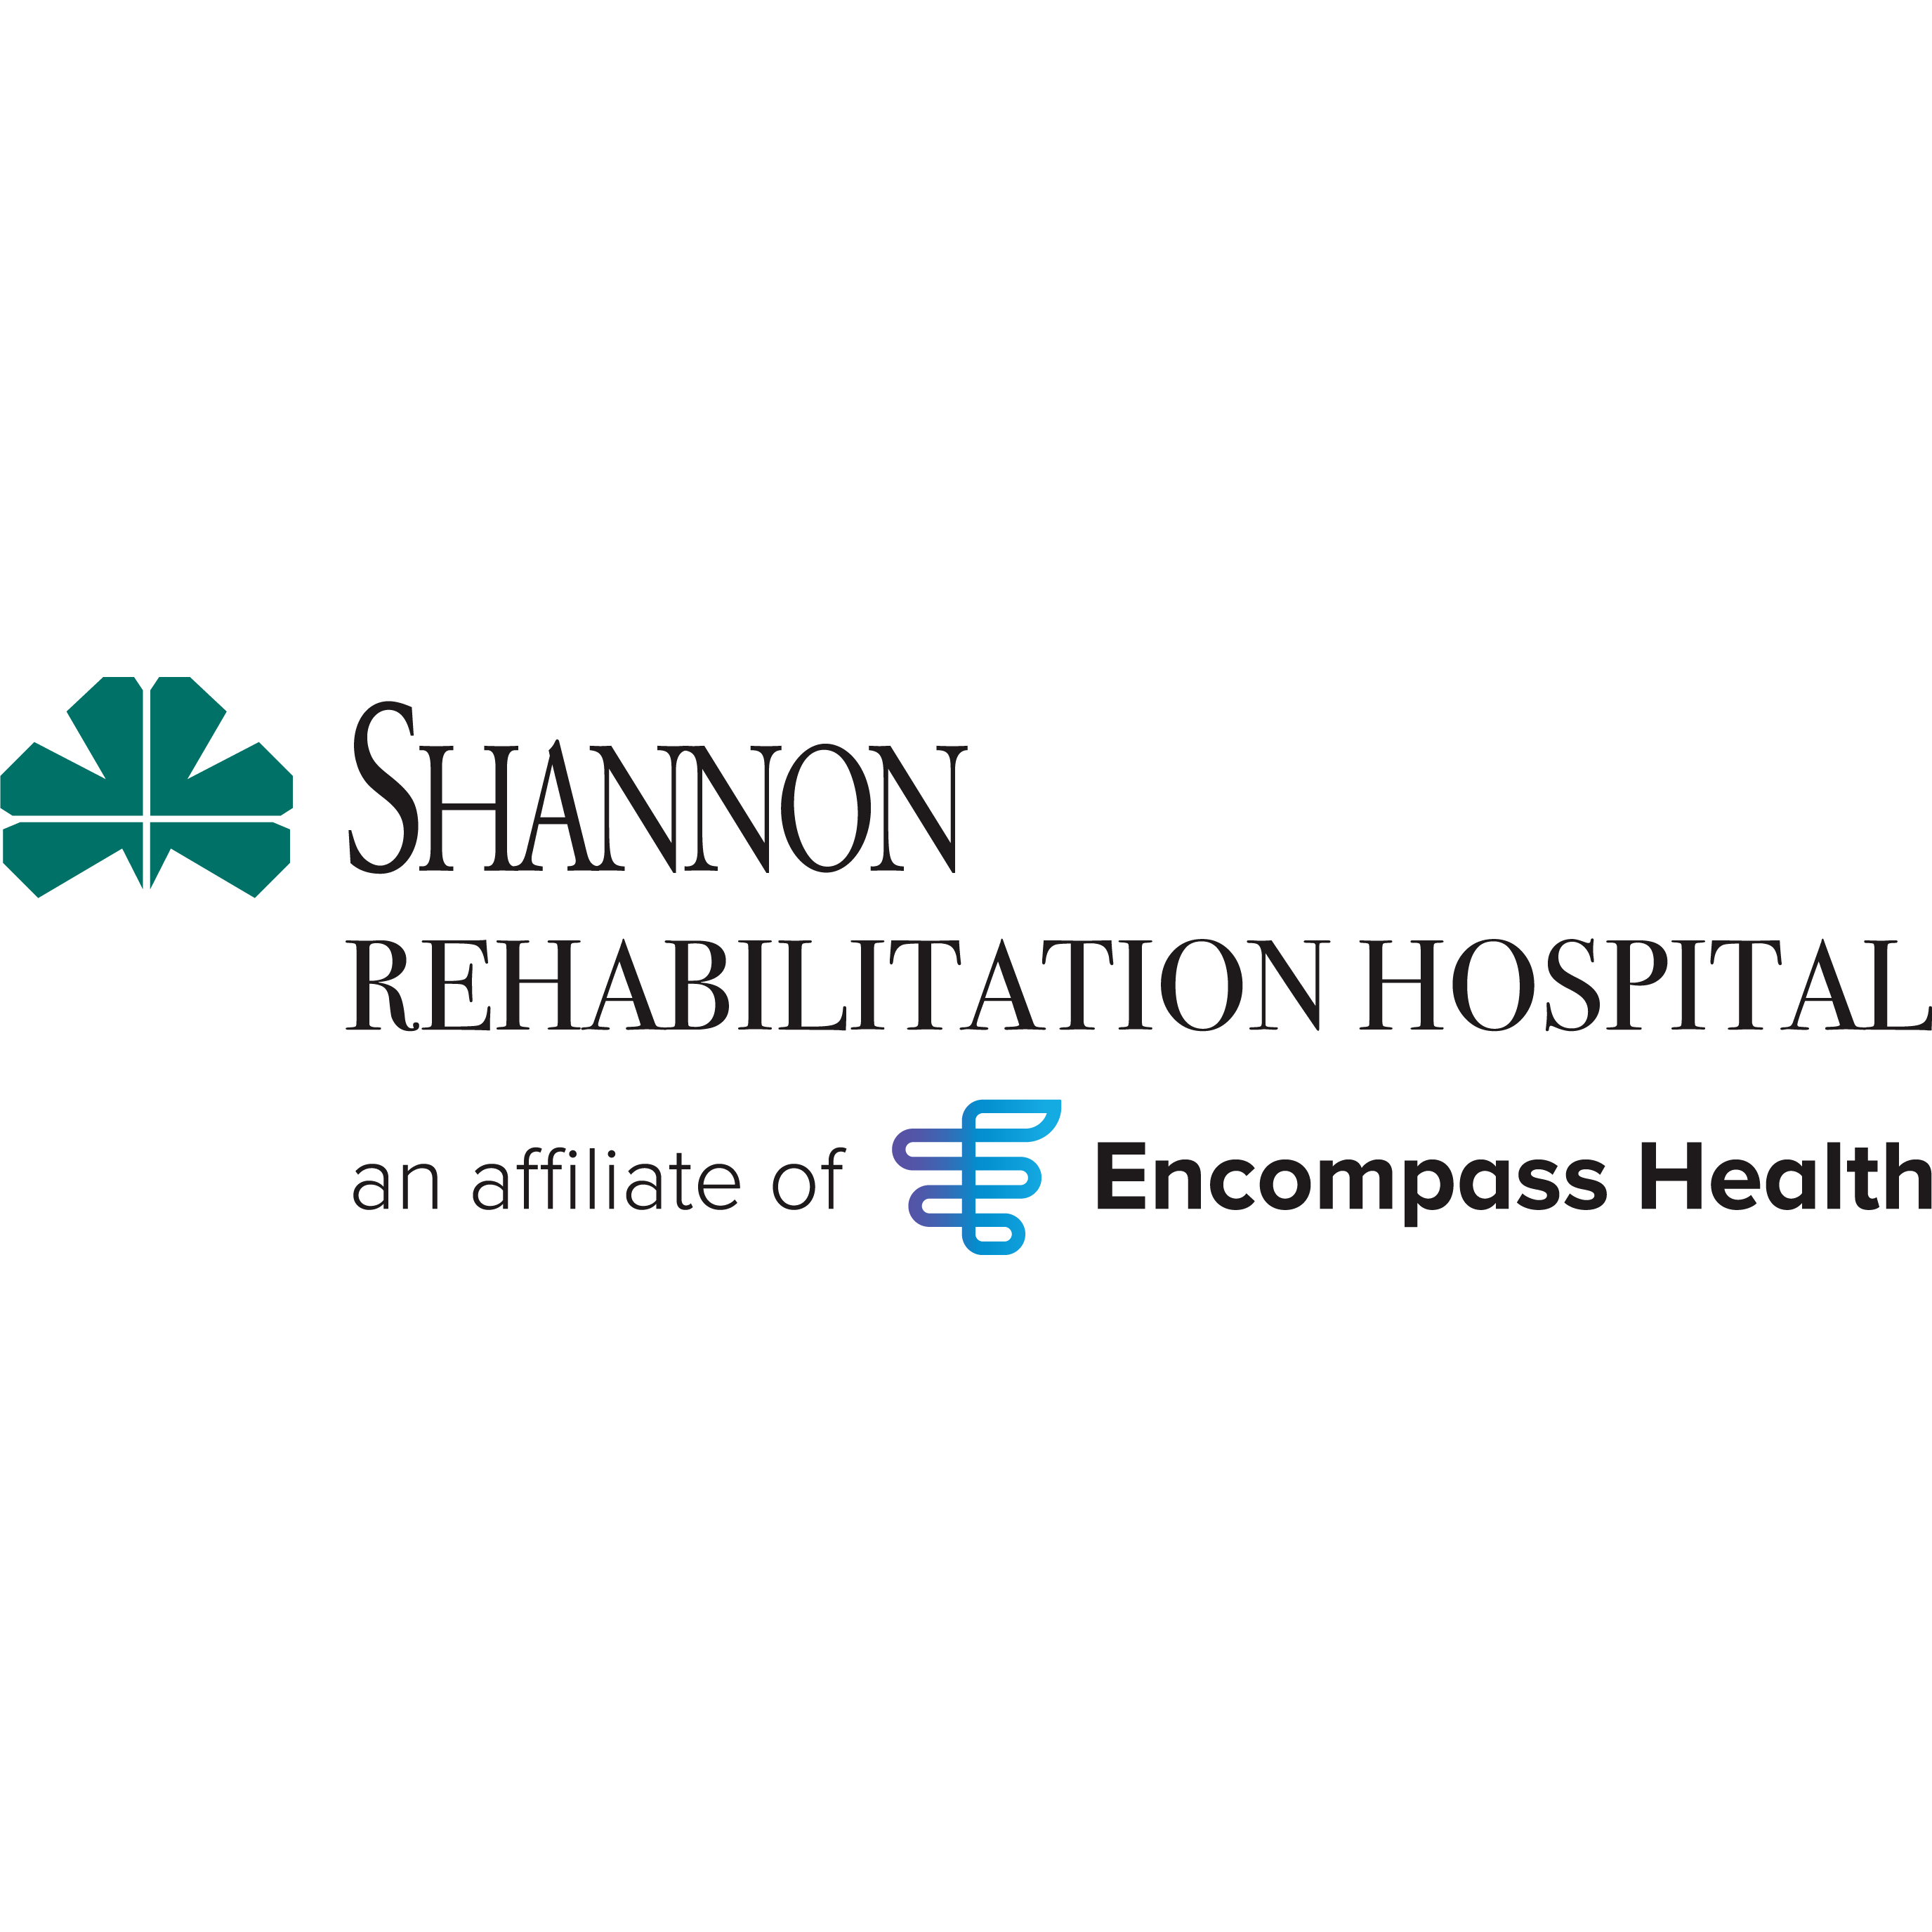 Shannon Rehabilitation Hospital, affiliate of Encompass Health